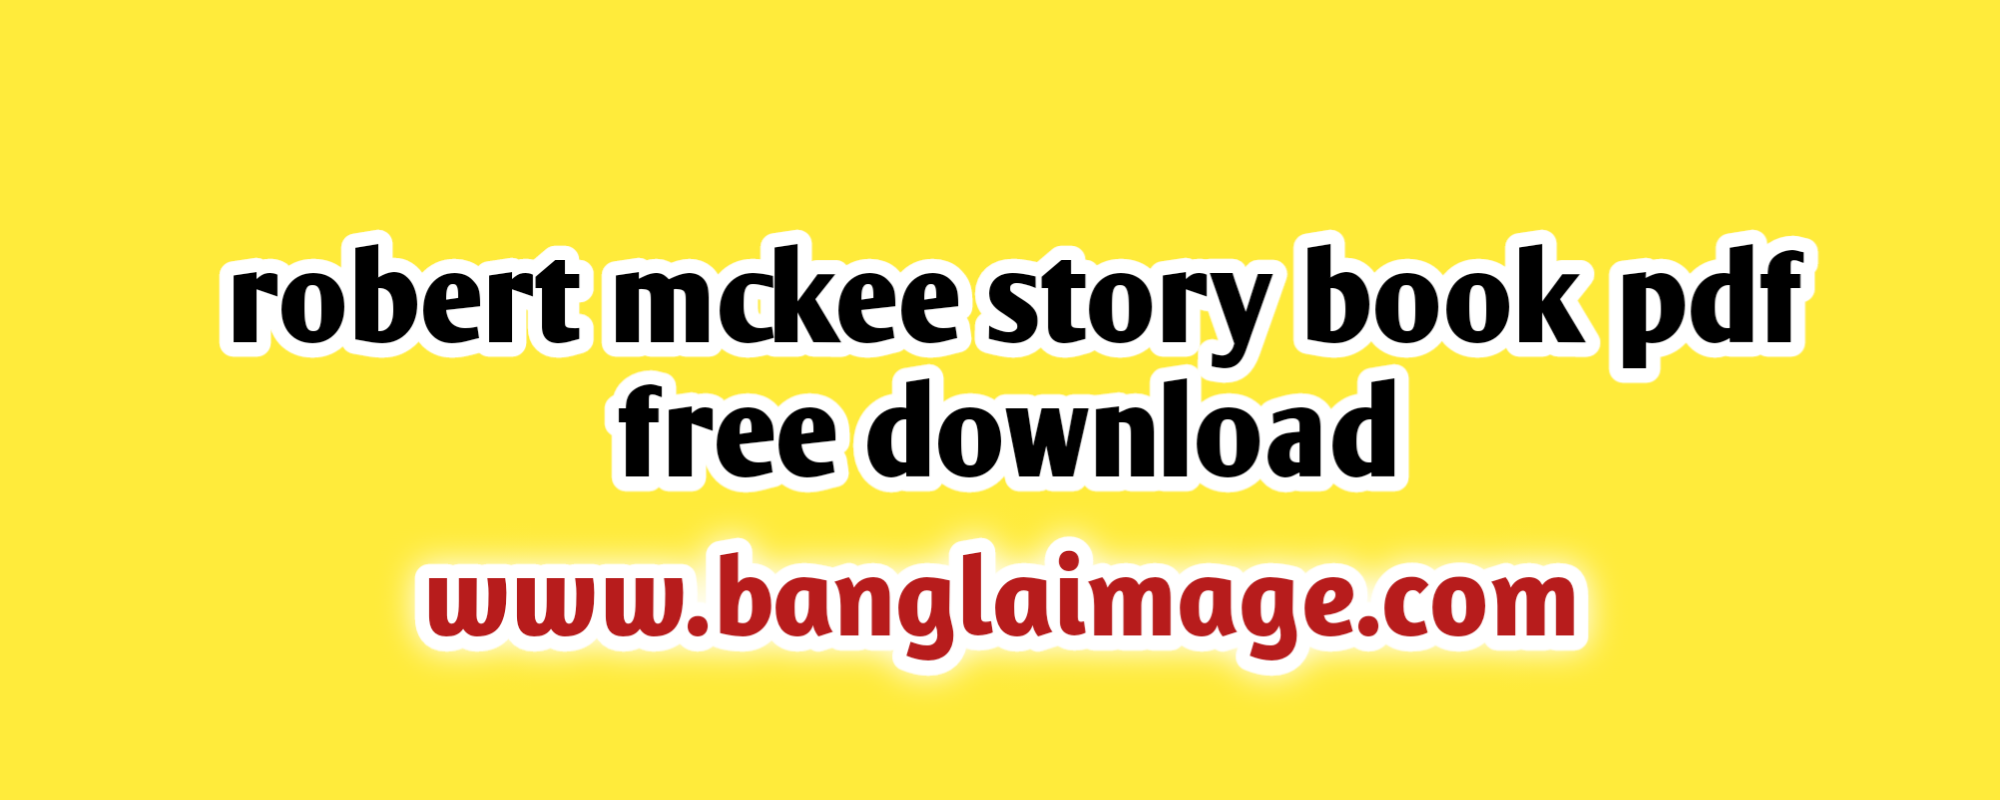 robert mckee story book pdf free download, robert mckee story pdf, story by robert mckee, robert mckee story seminar